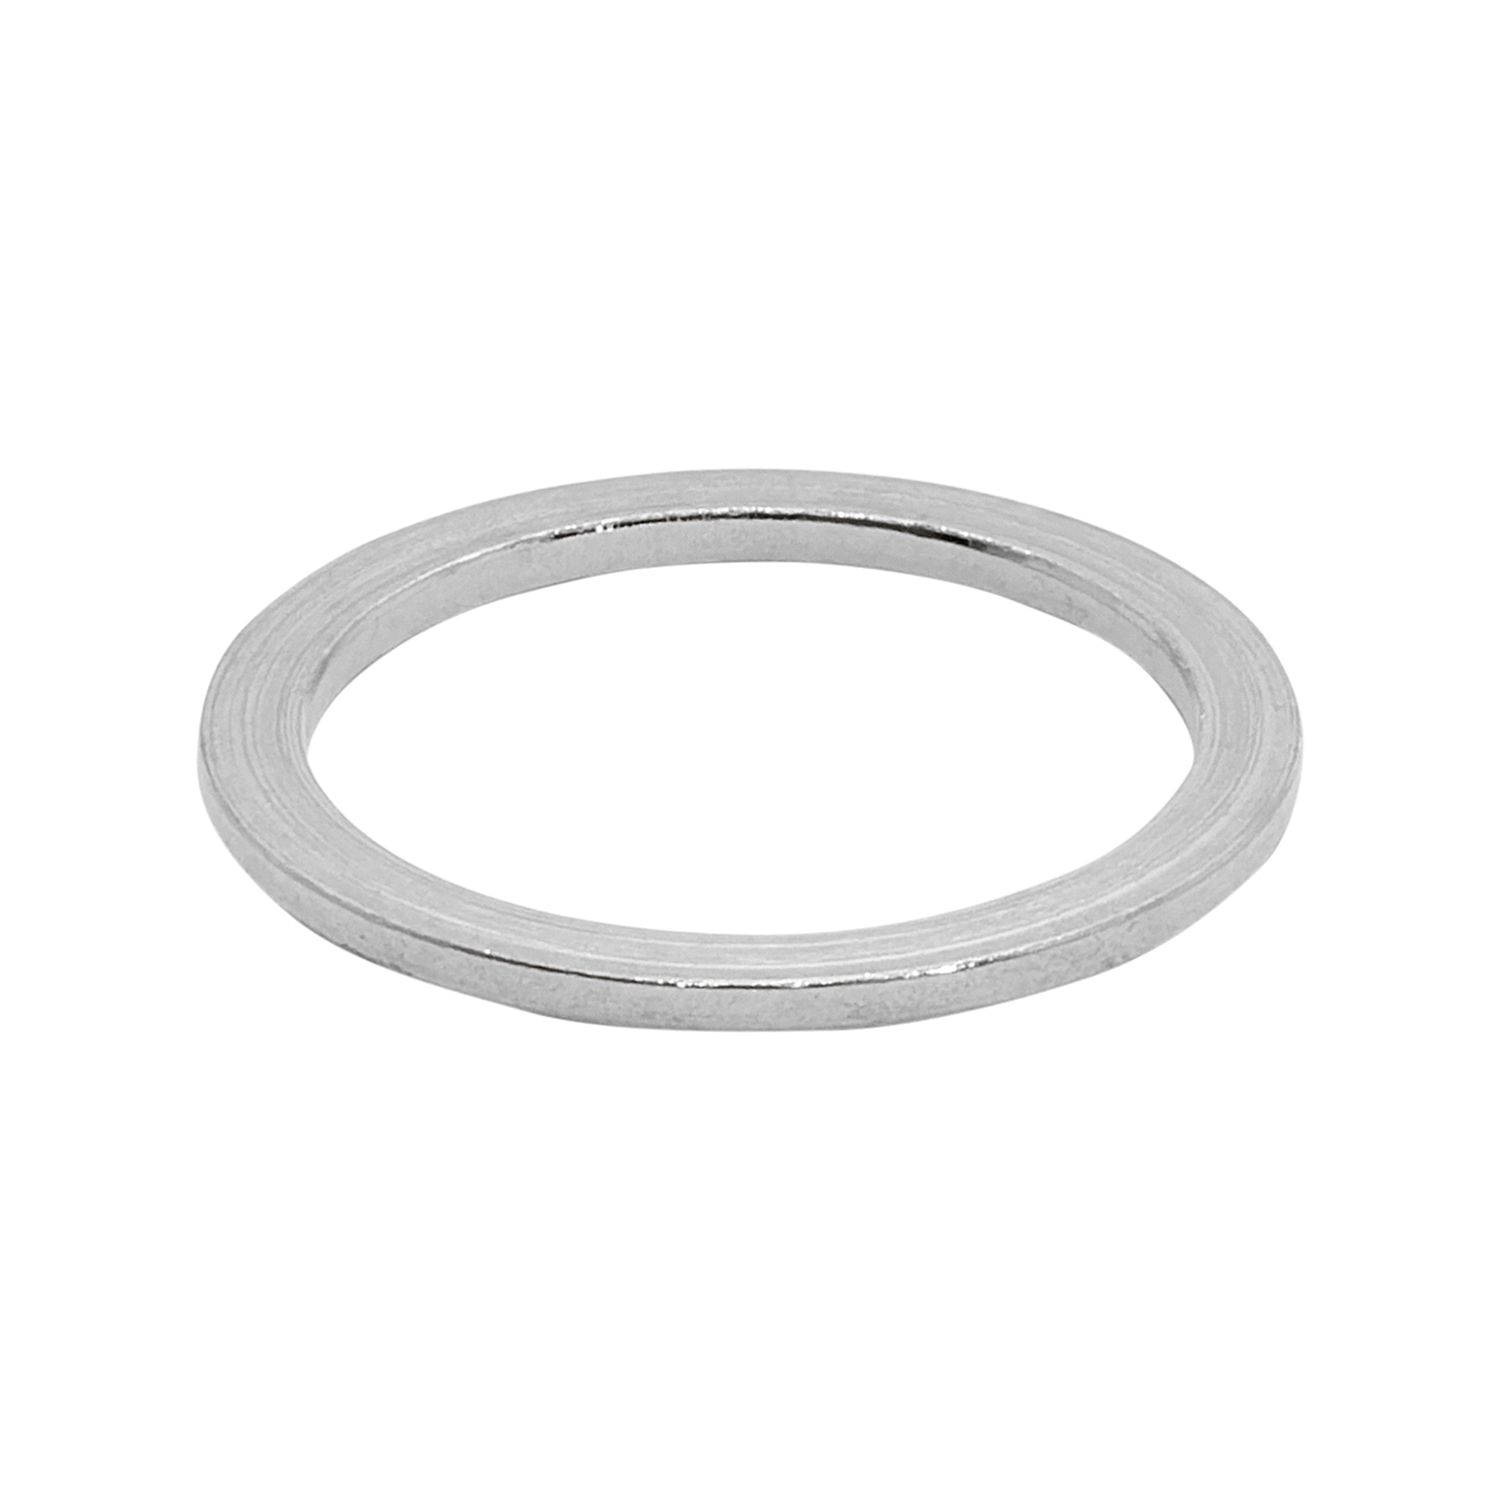 Spacer Alu, 2 mm, 1 1/8" in Silber glänzend